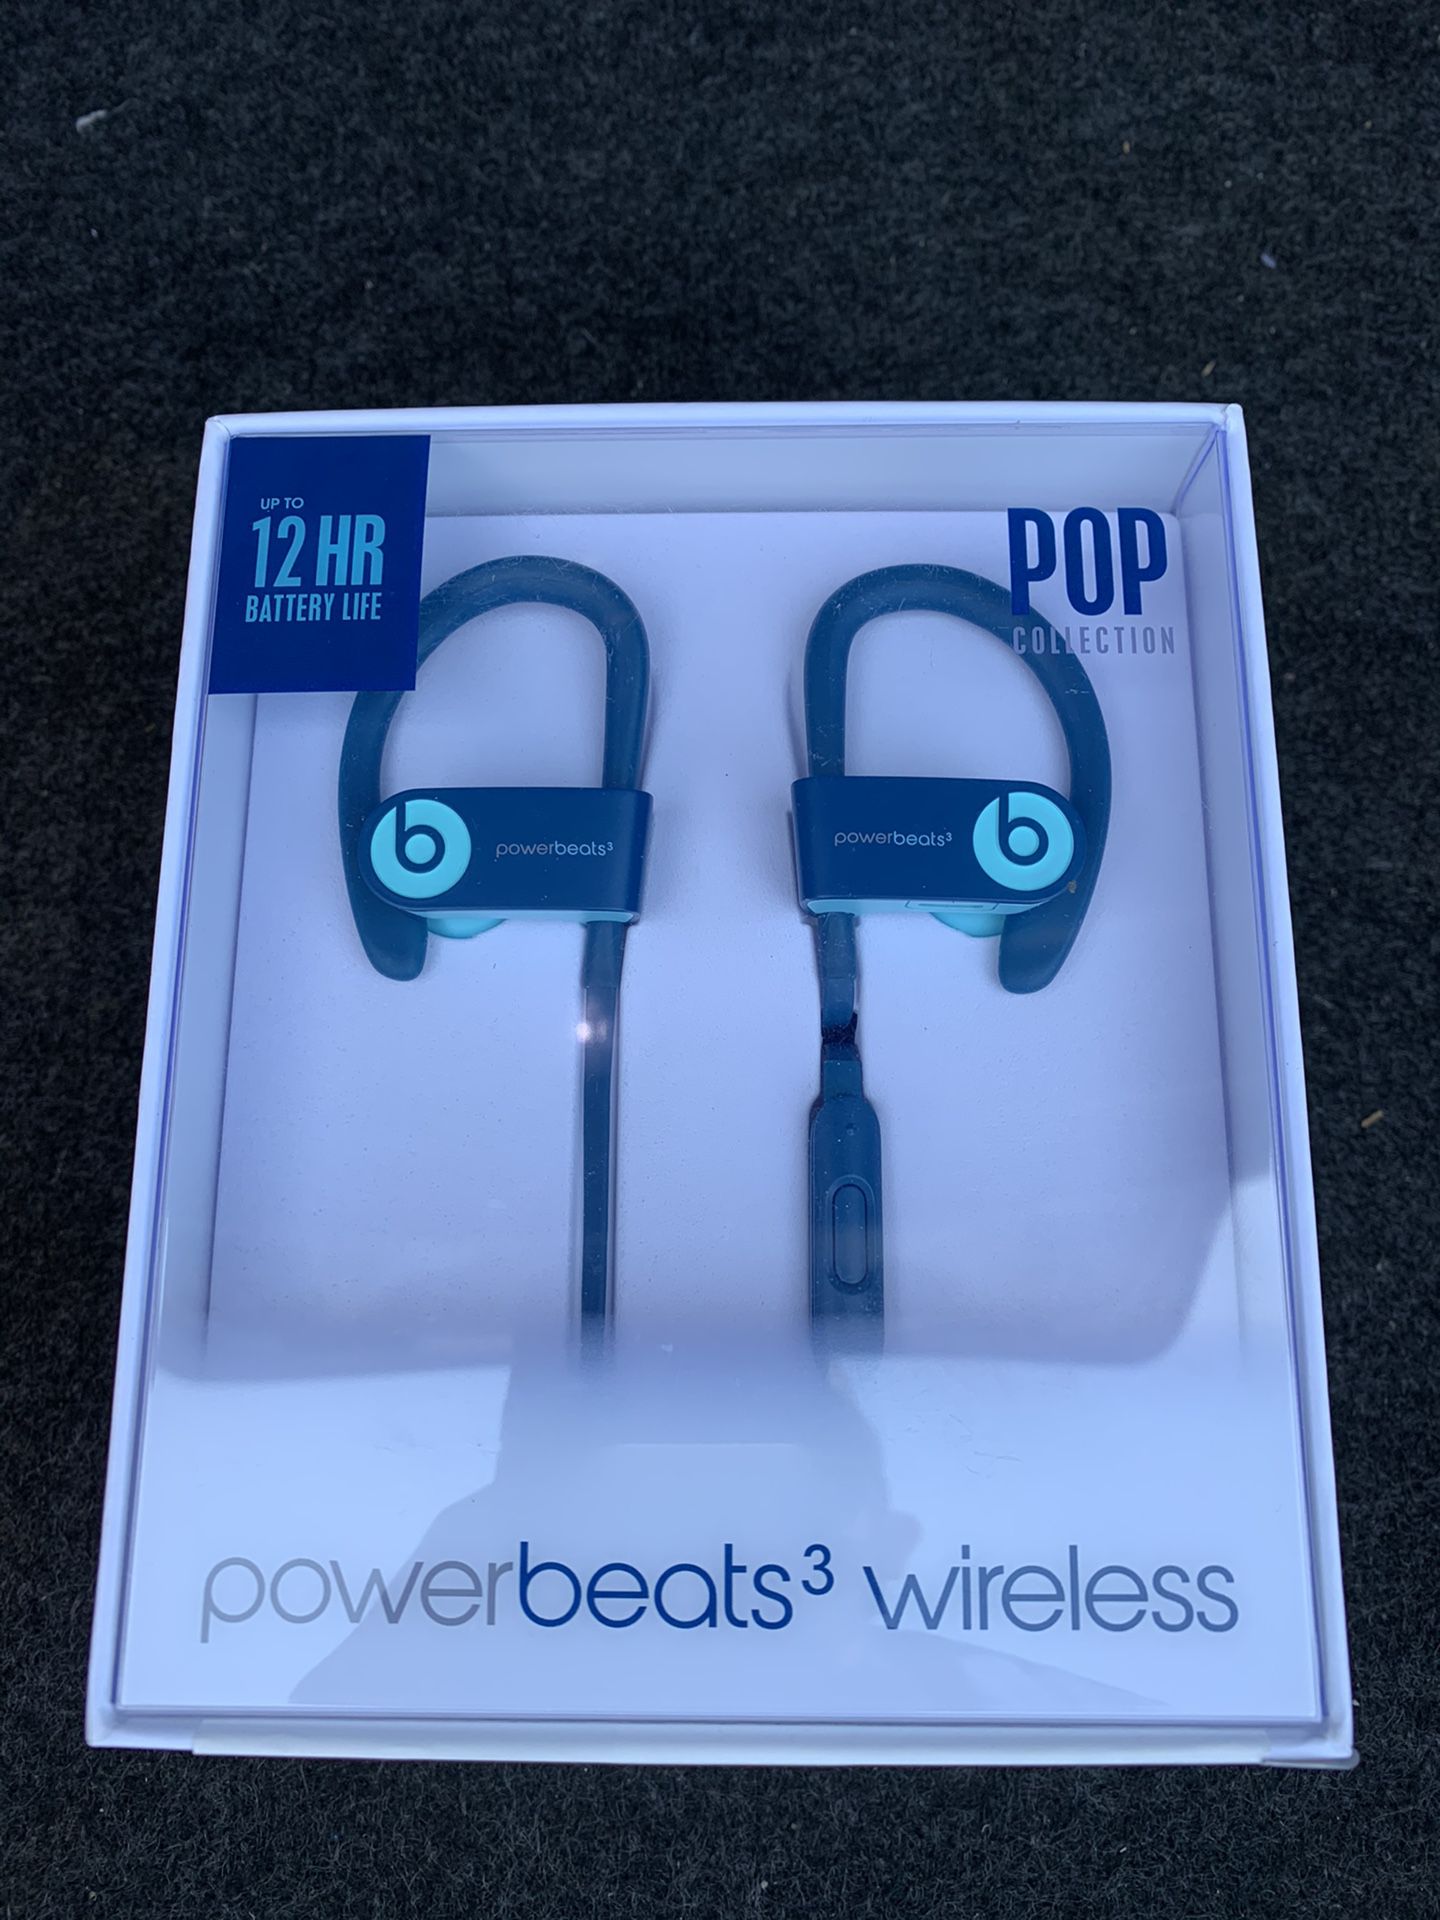 Power beats 3 wireless brand new